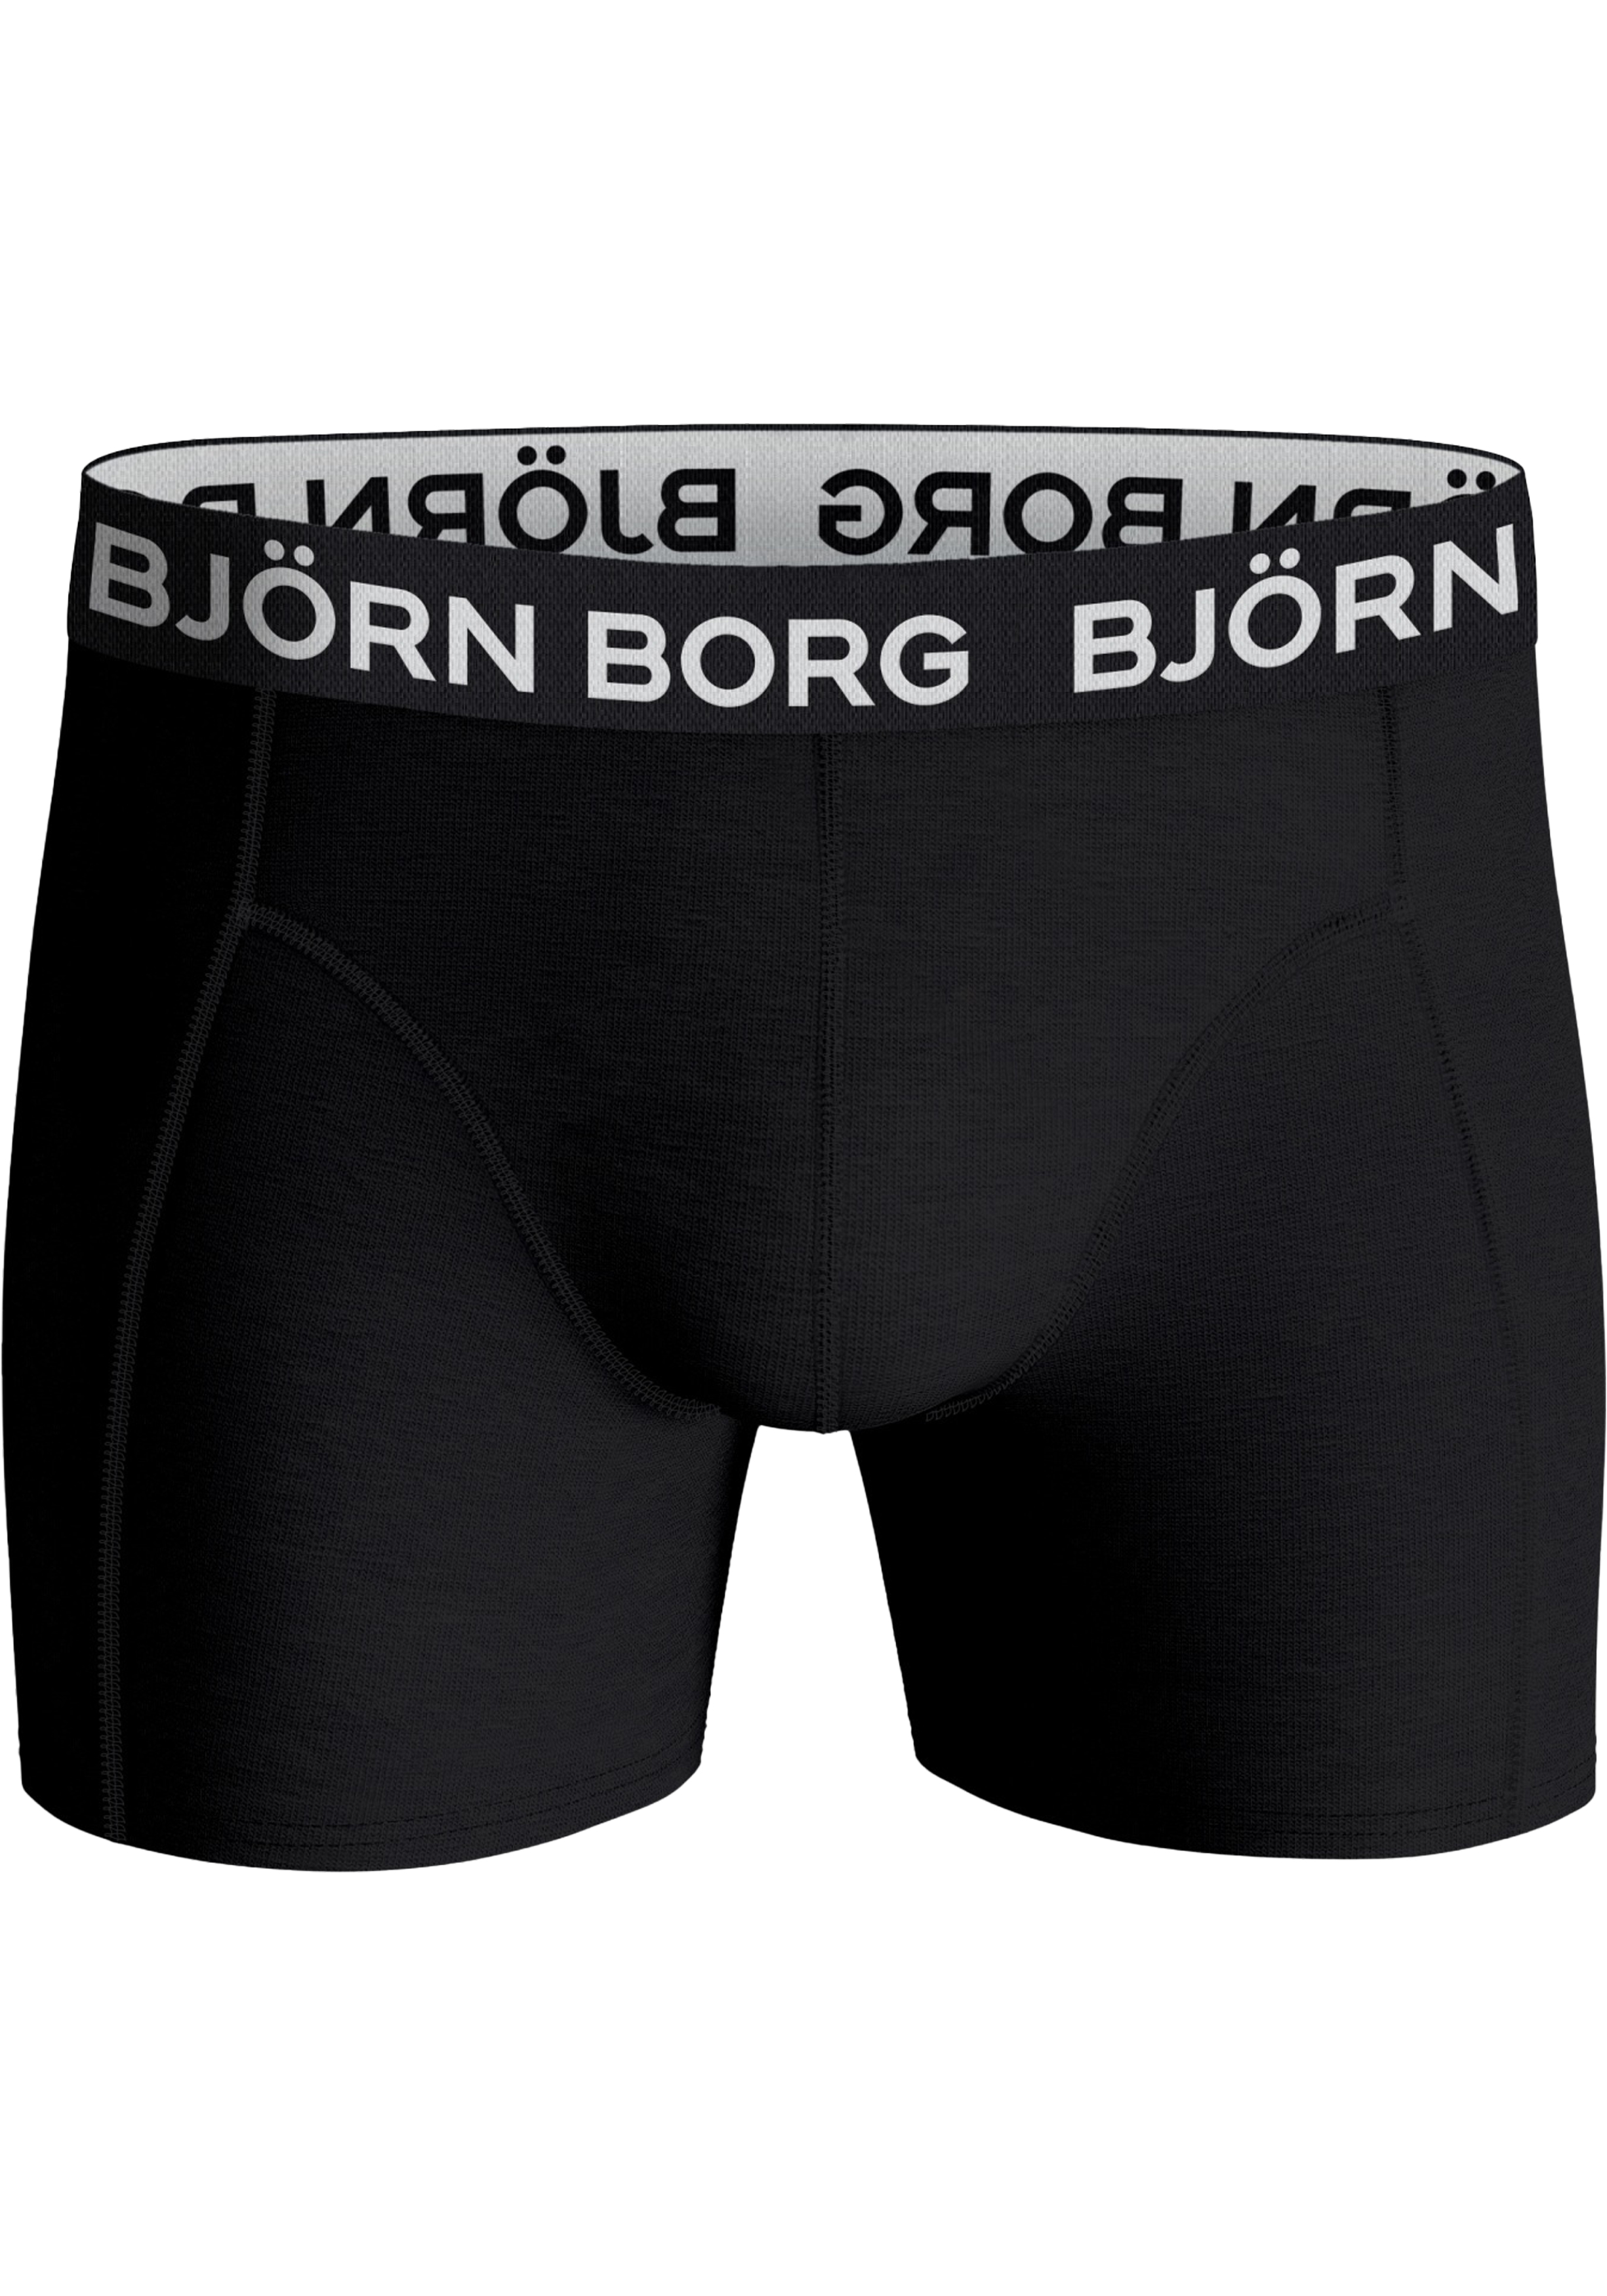 Bjorn Borg Cotton Stretch boxers, heren boxers normale lengte (1-pack), zwart